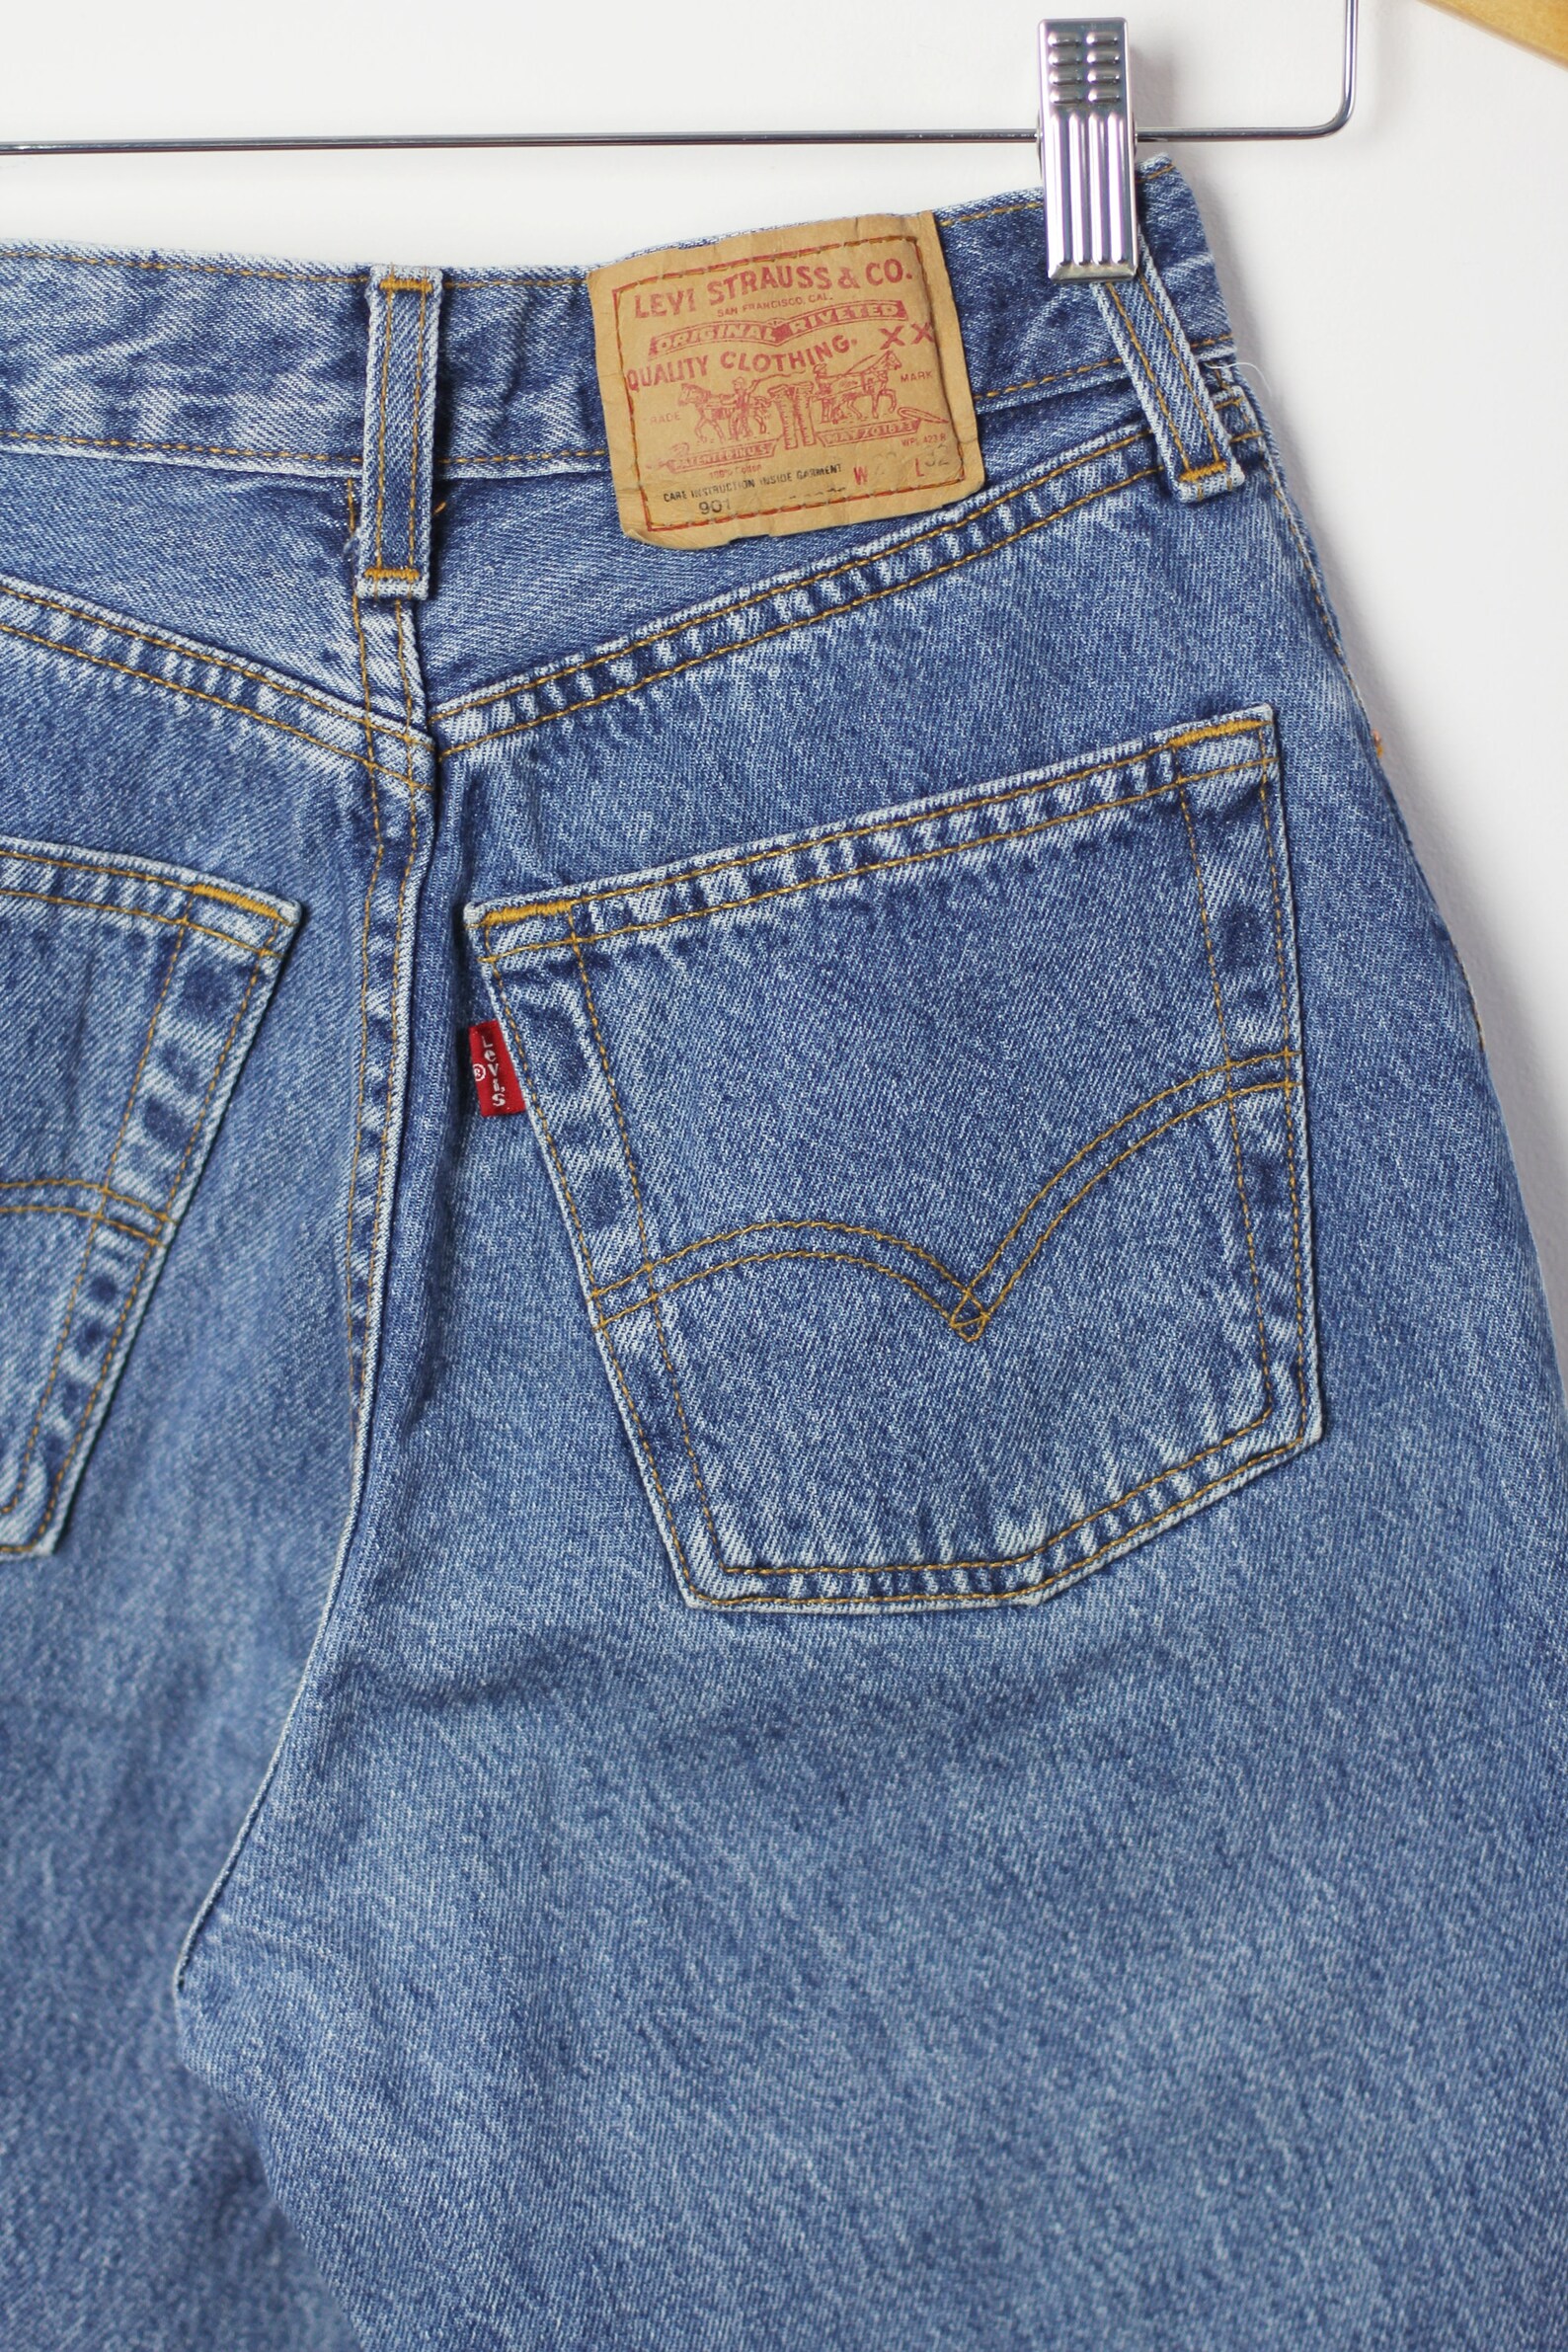 LEVI'S 901 jeans size 24 Vintage blue denim pants in size | Etsy